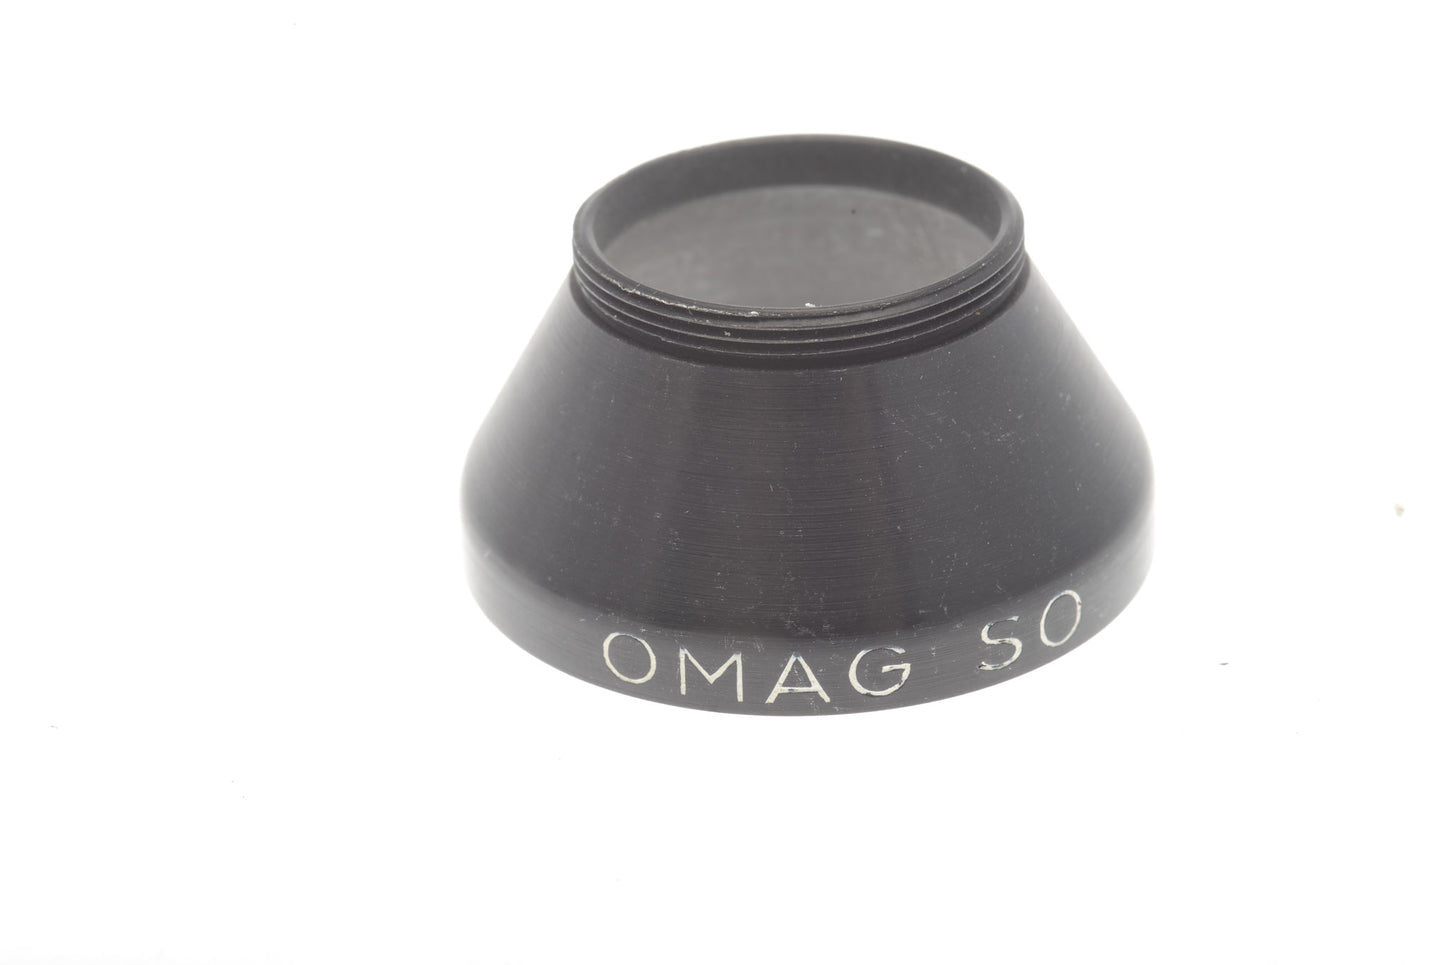 Other Omag S 0 Lens Hood